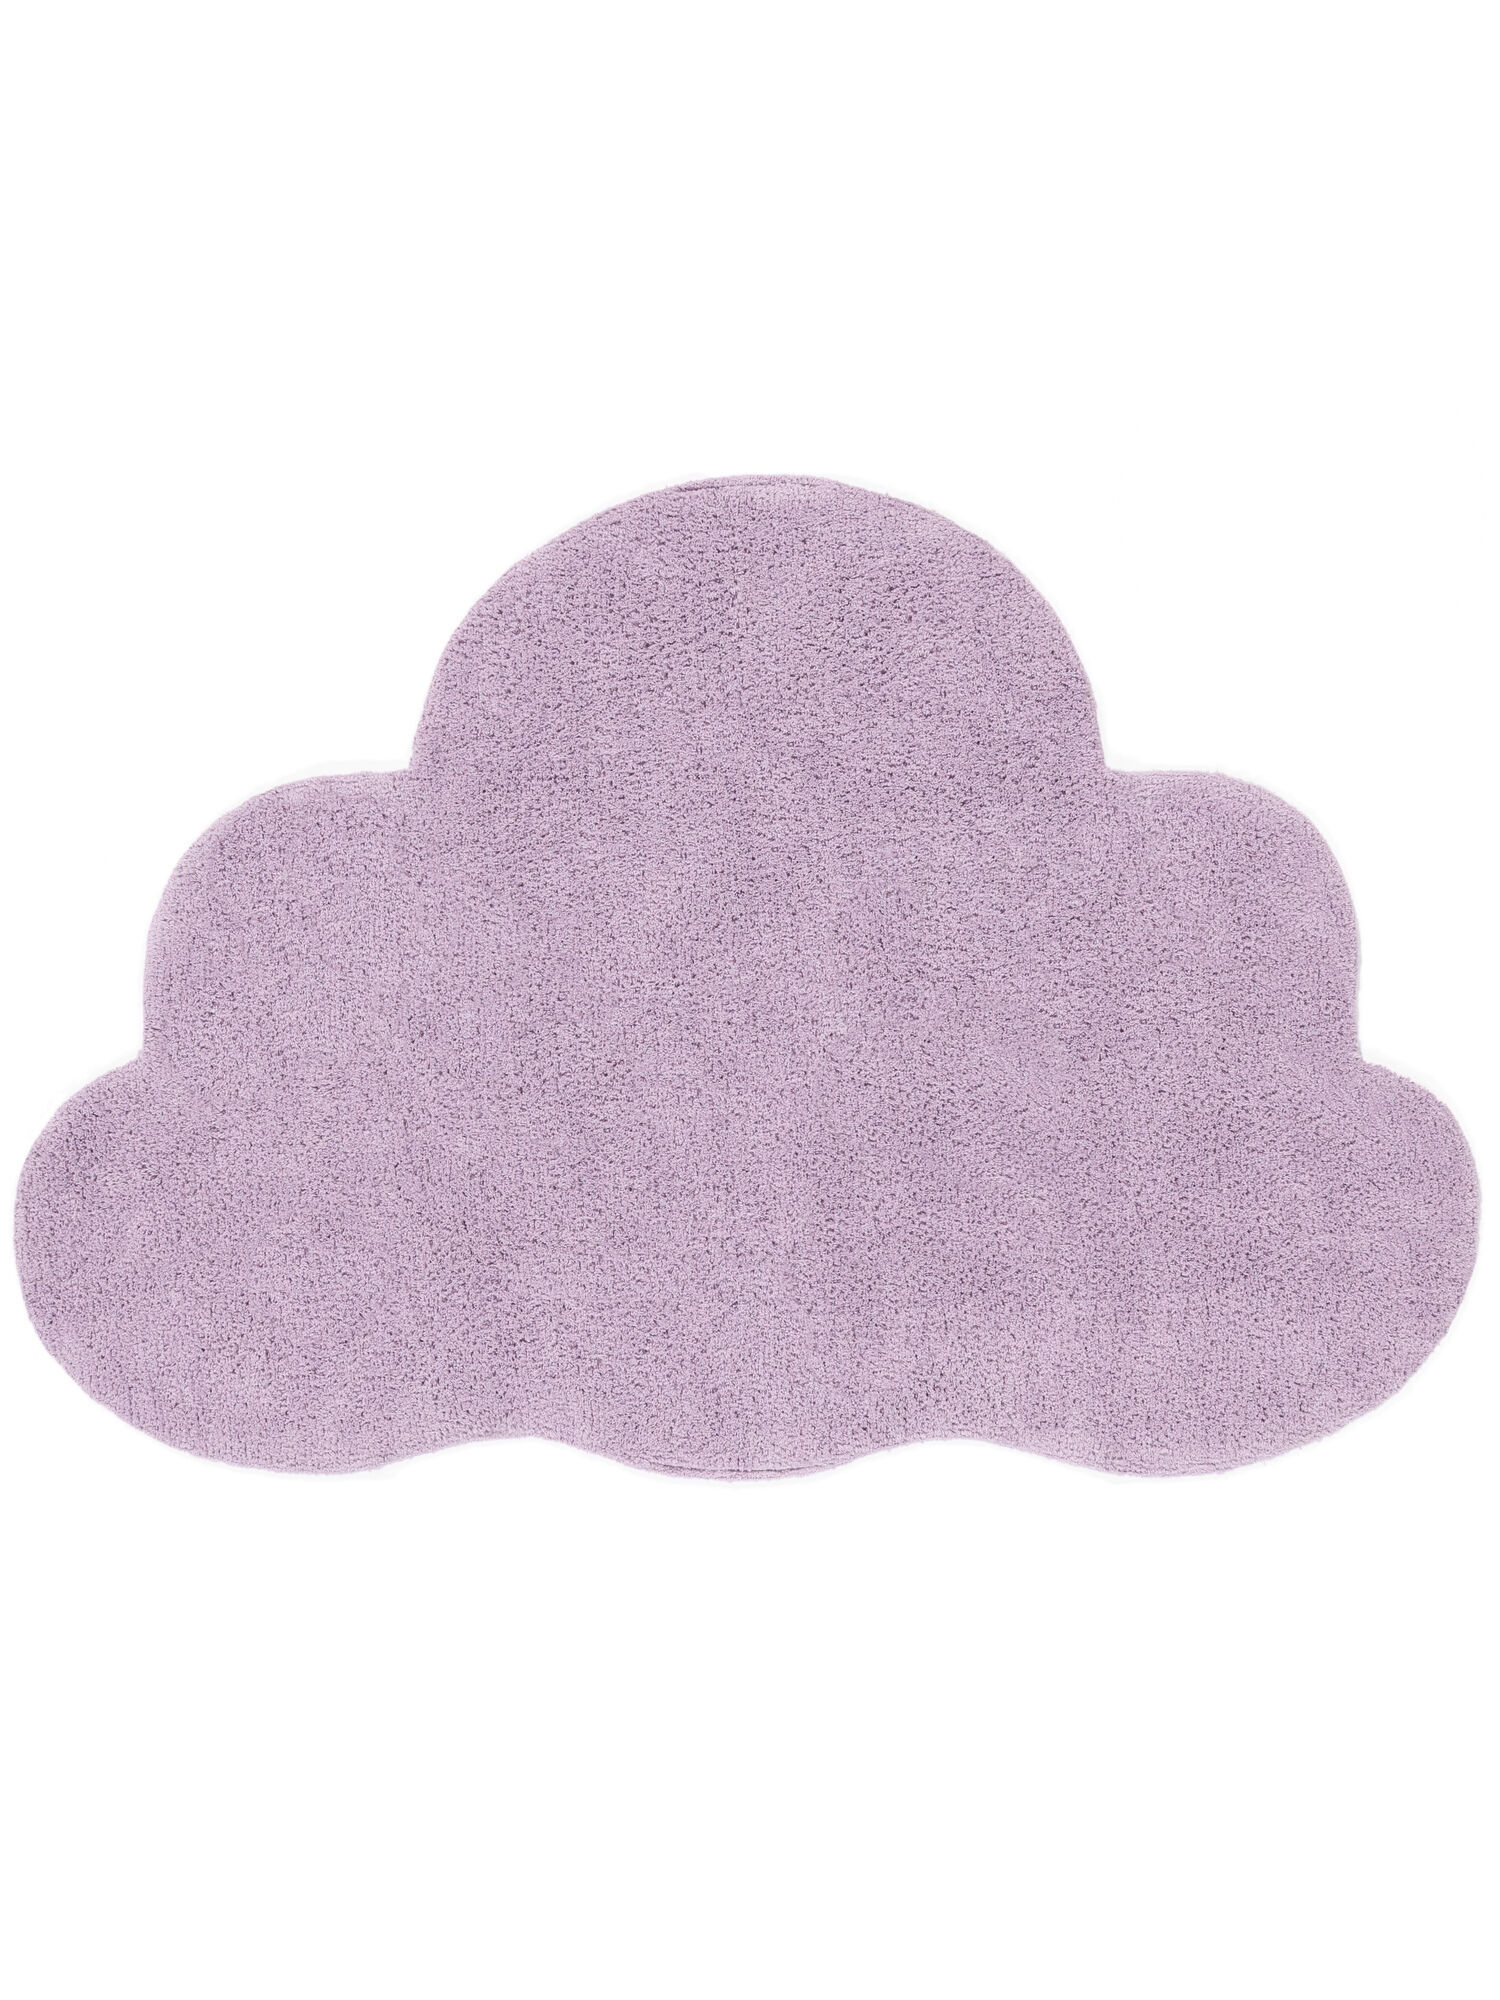 RugVista Happy Cloud Tappeto - Porpora 100x150